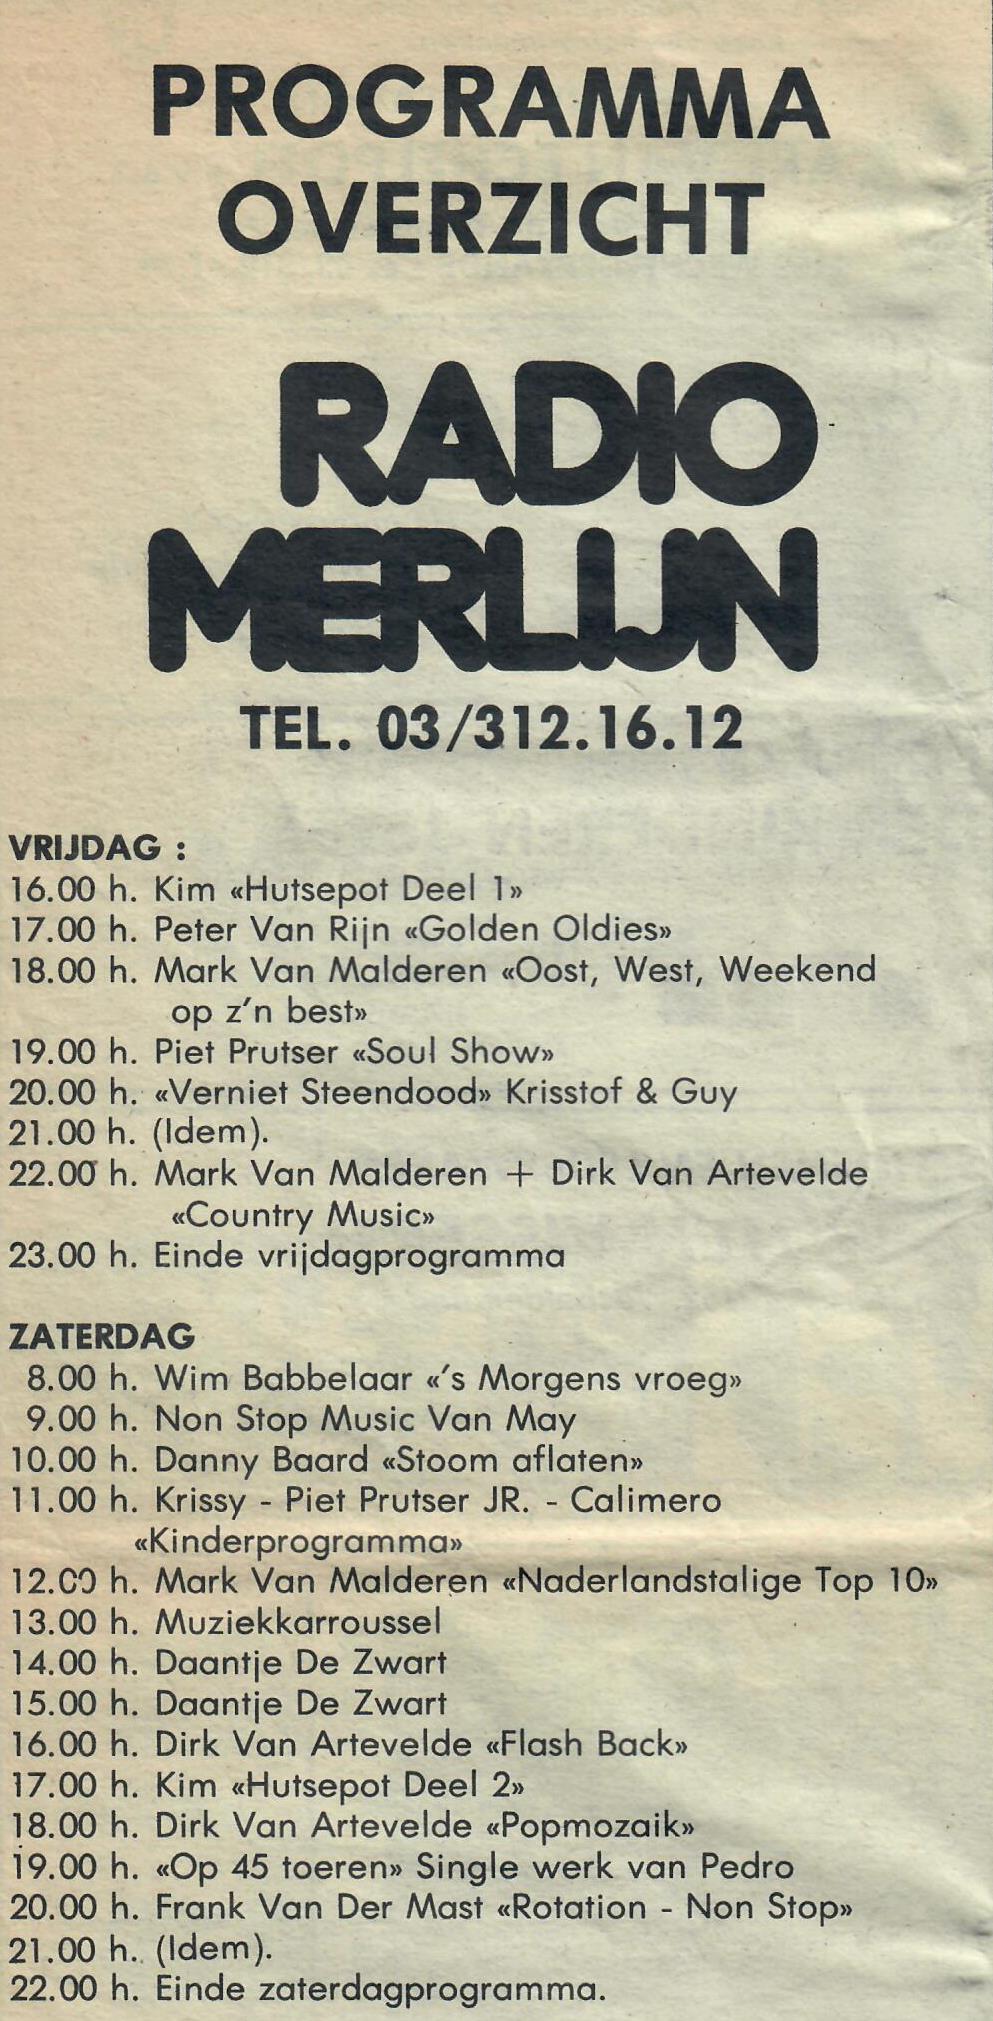 Radio Merlijn - schema 1